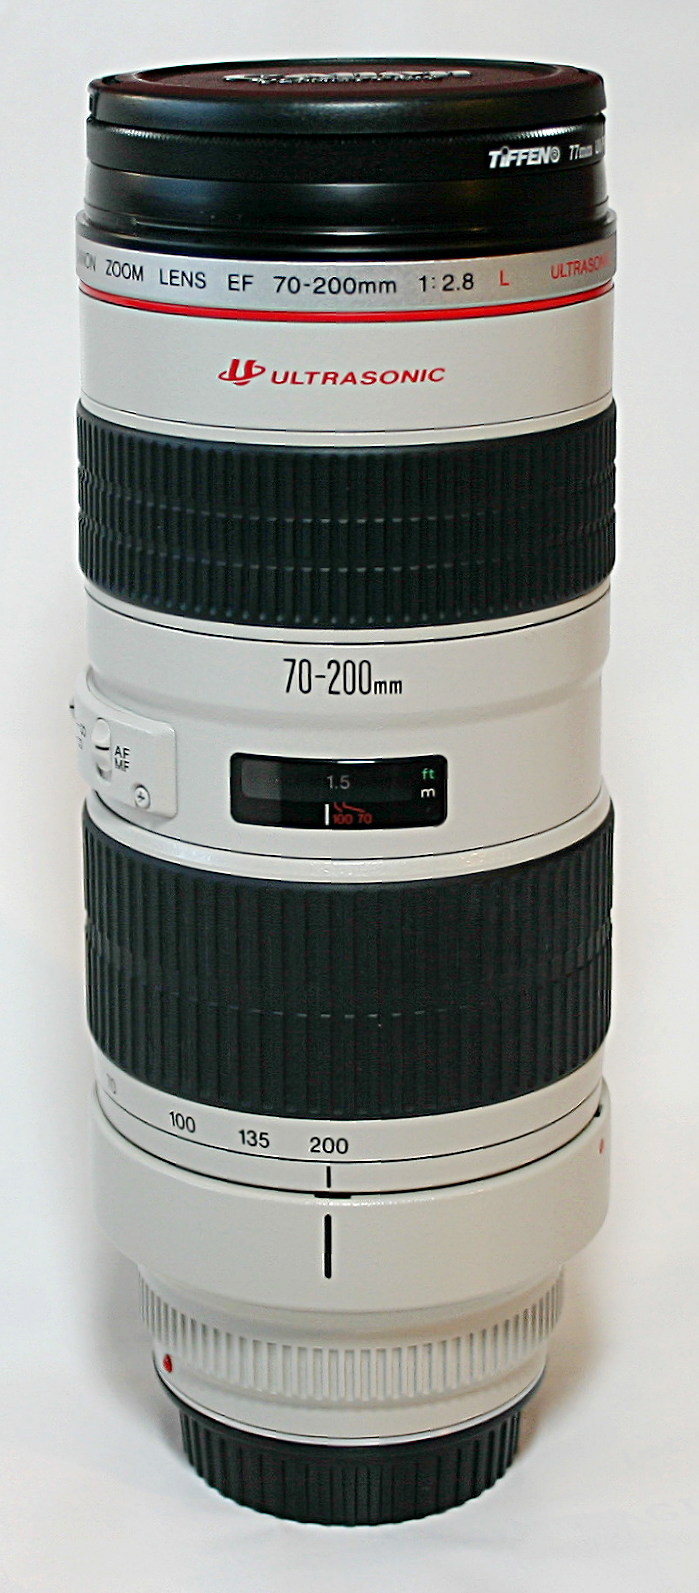 Recyclen Misbruik ouder Canon L lens - Wikipedia